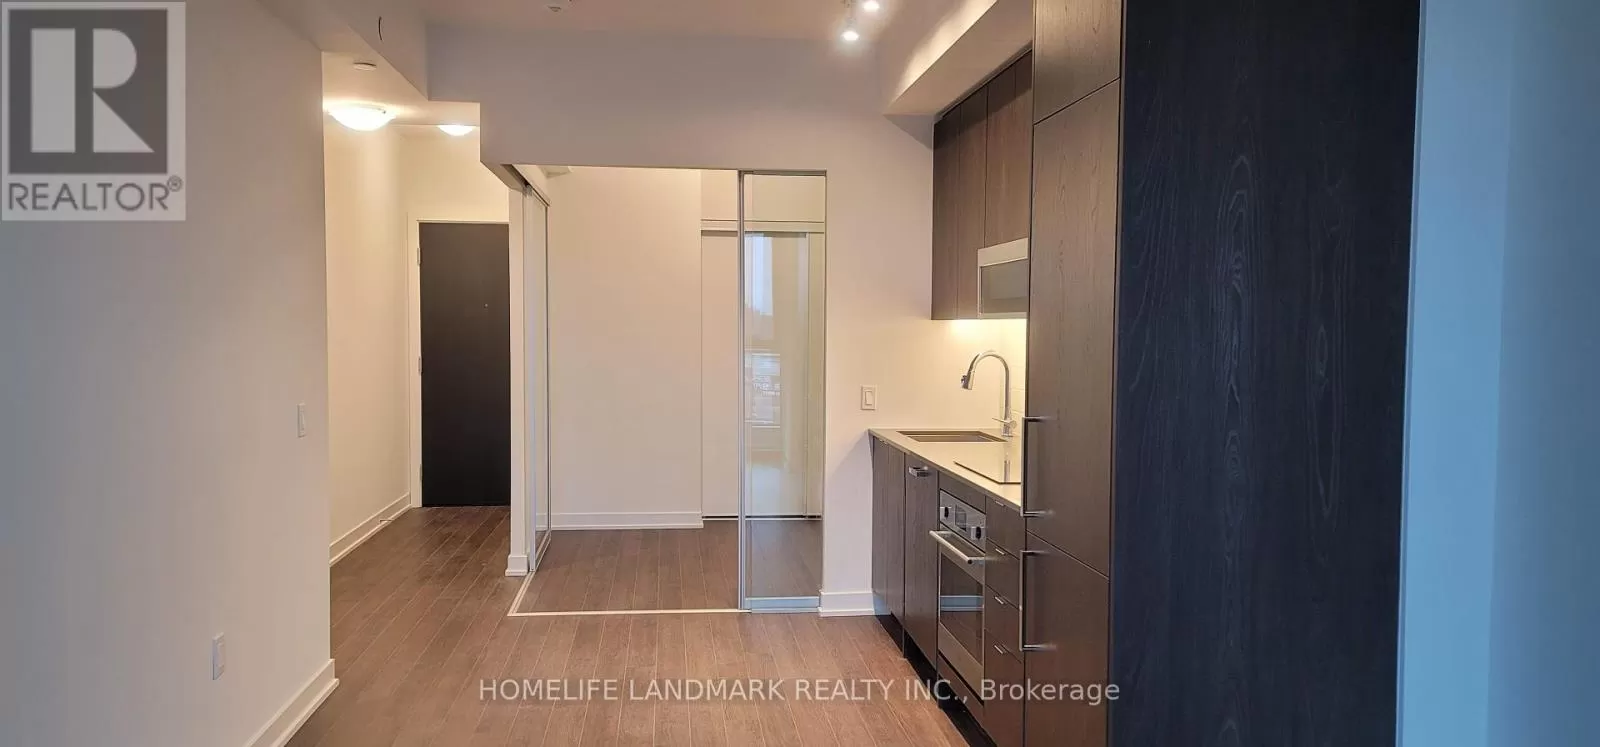 Apartment for rent: 622 - 250 Lawrence Avenue W, Toronto, Ontario M5M 1B2